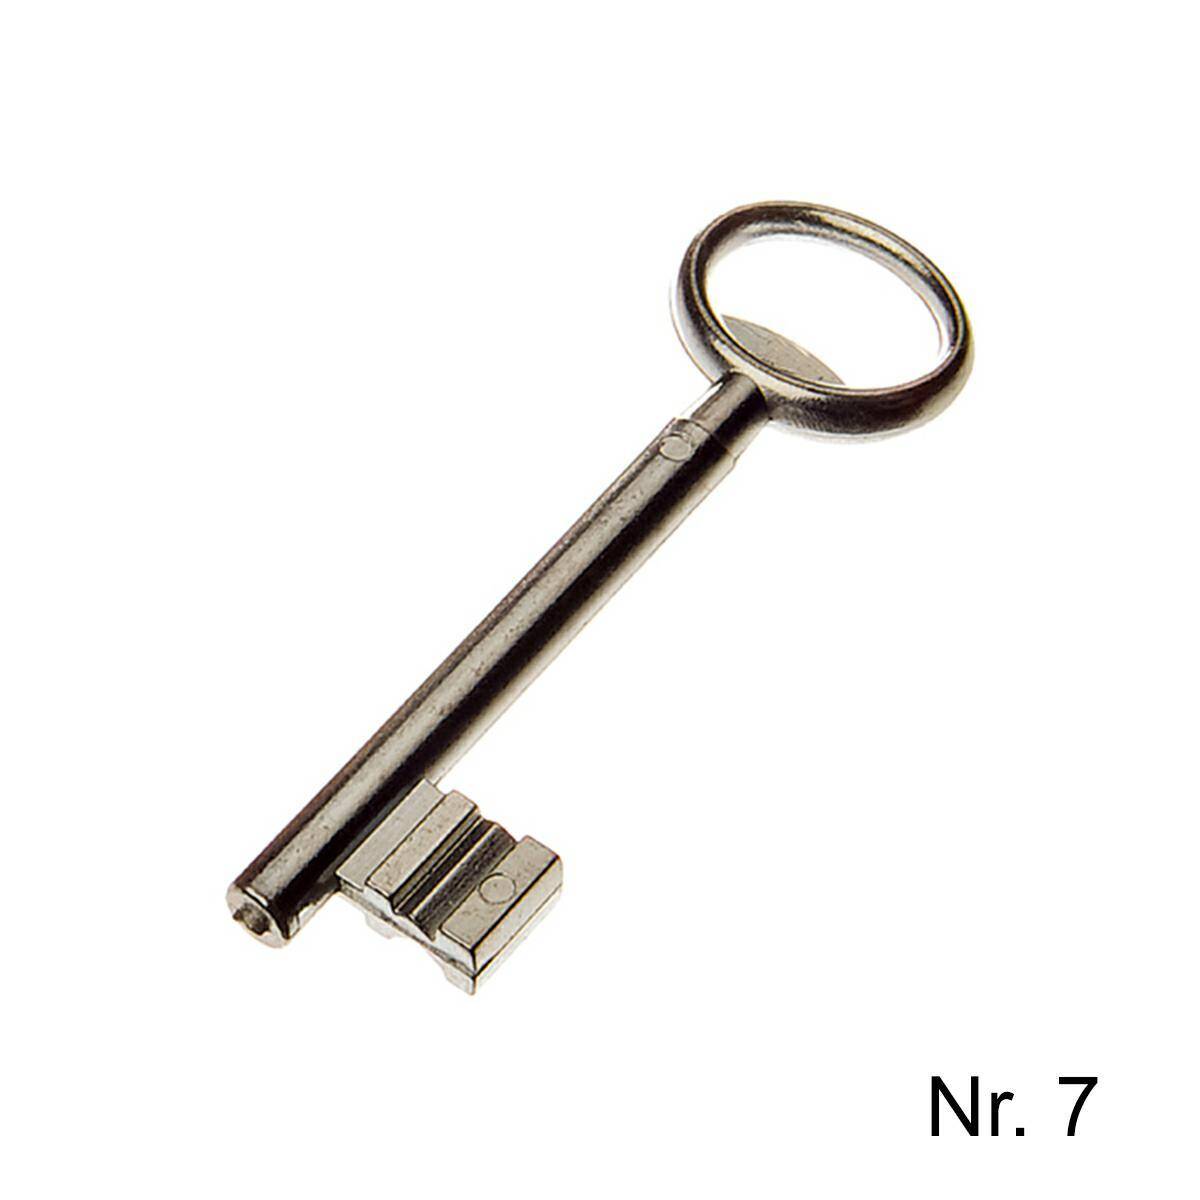 Cast key Jania for the lock - No. 7